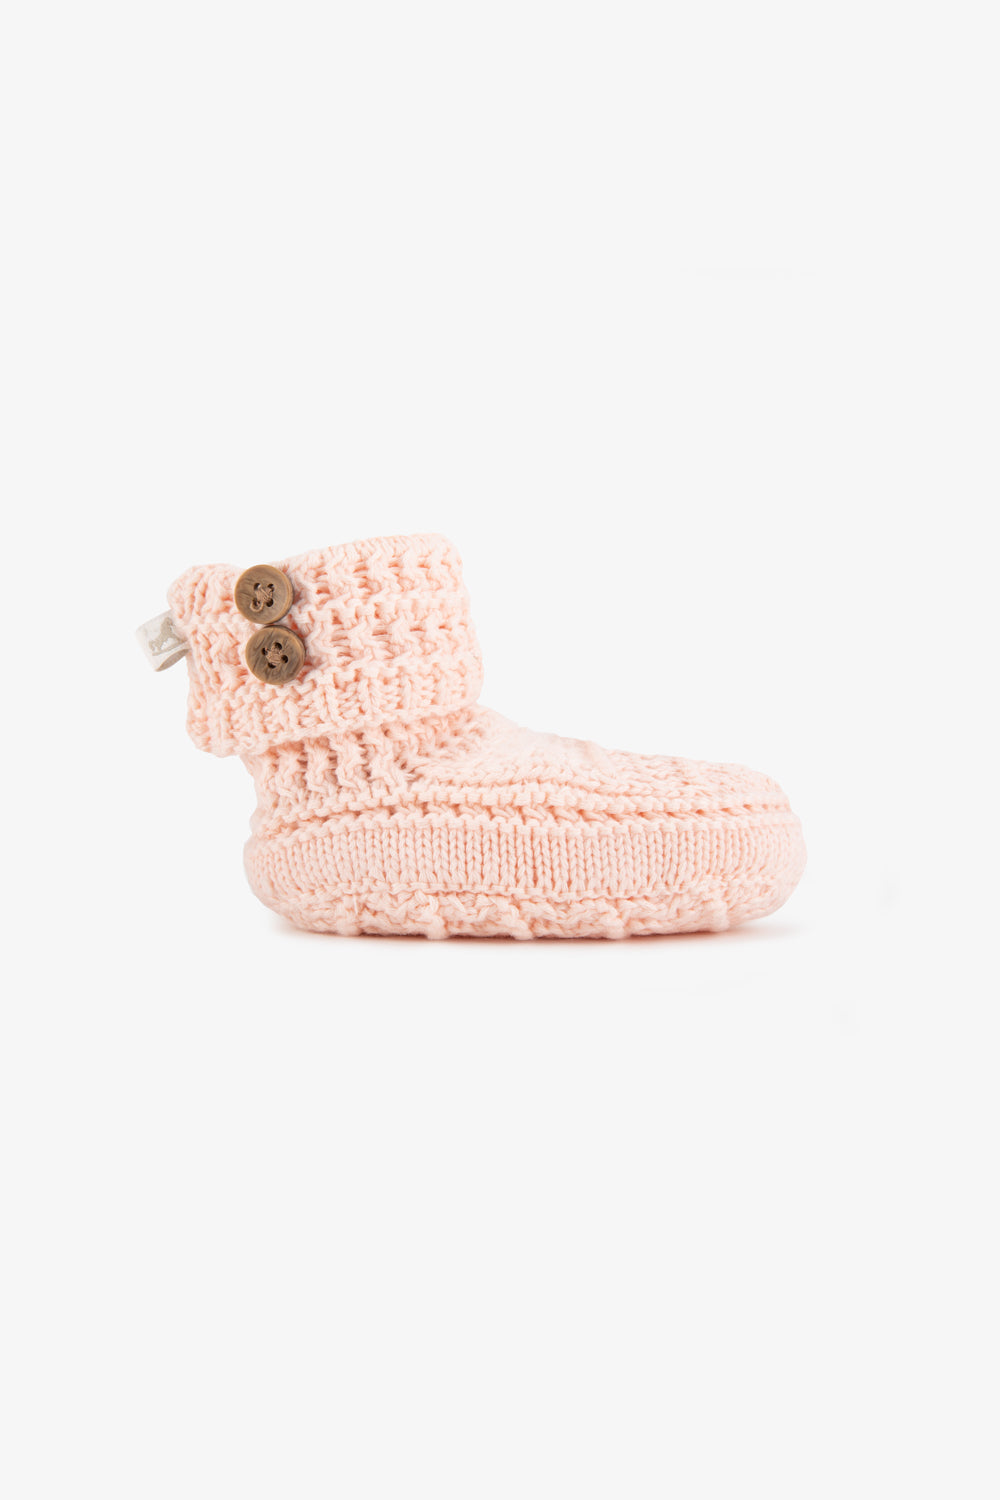 Crochet Cotton Booties, pink (PK)